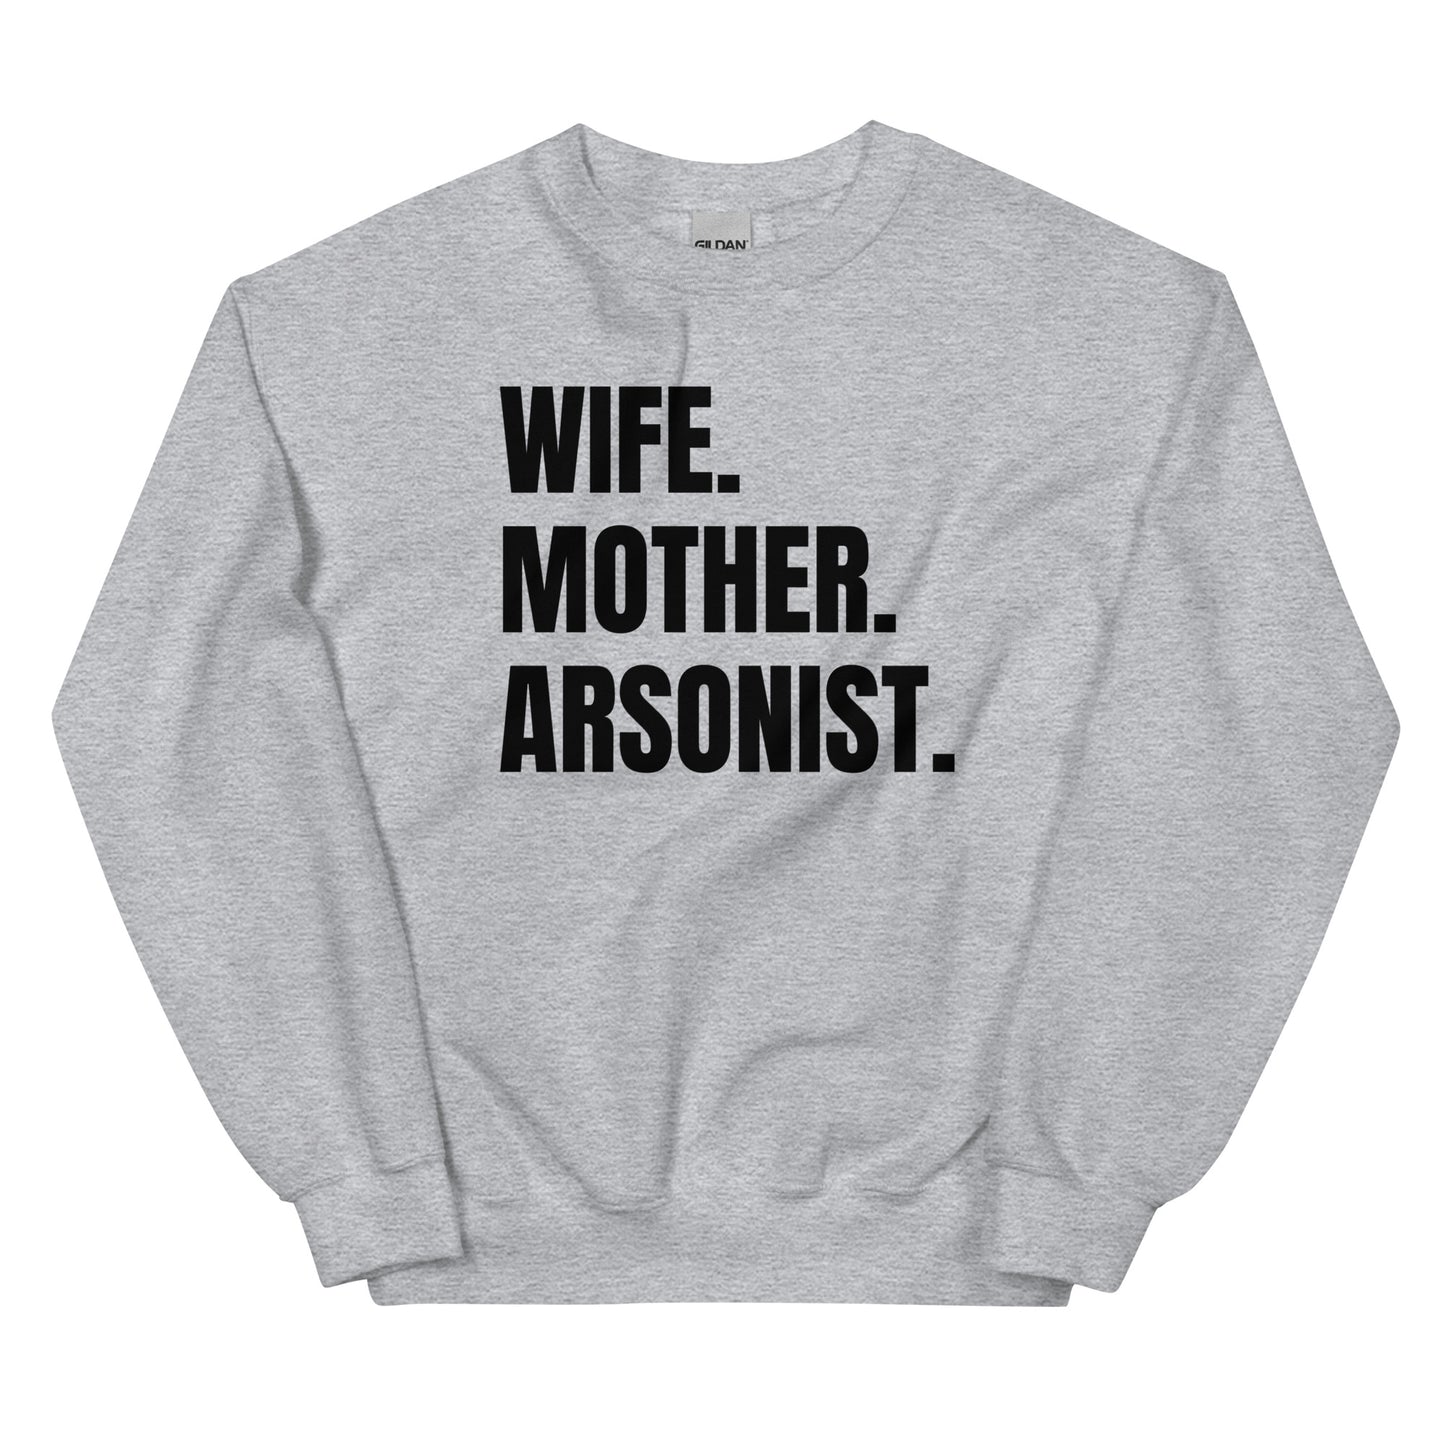 Wife. Mother. Arsonist. Unisex Sweatshirt